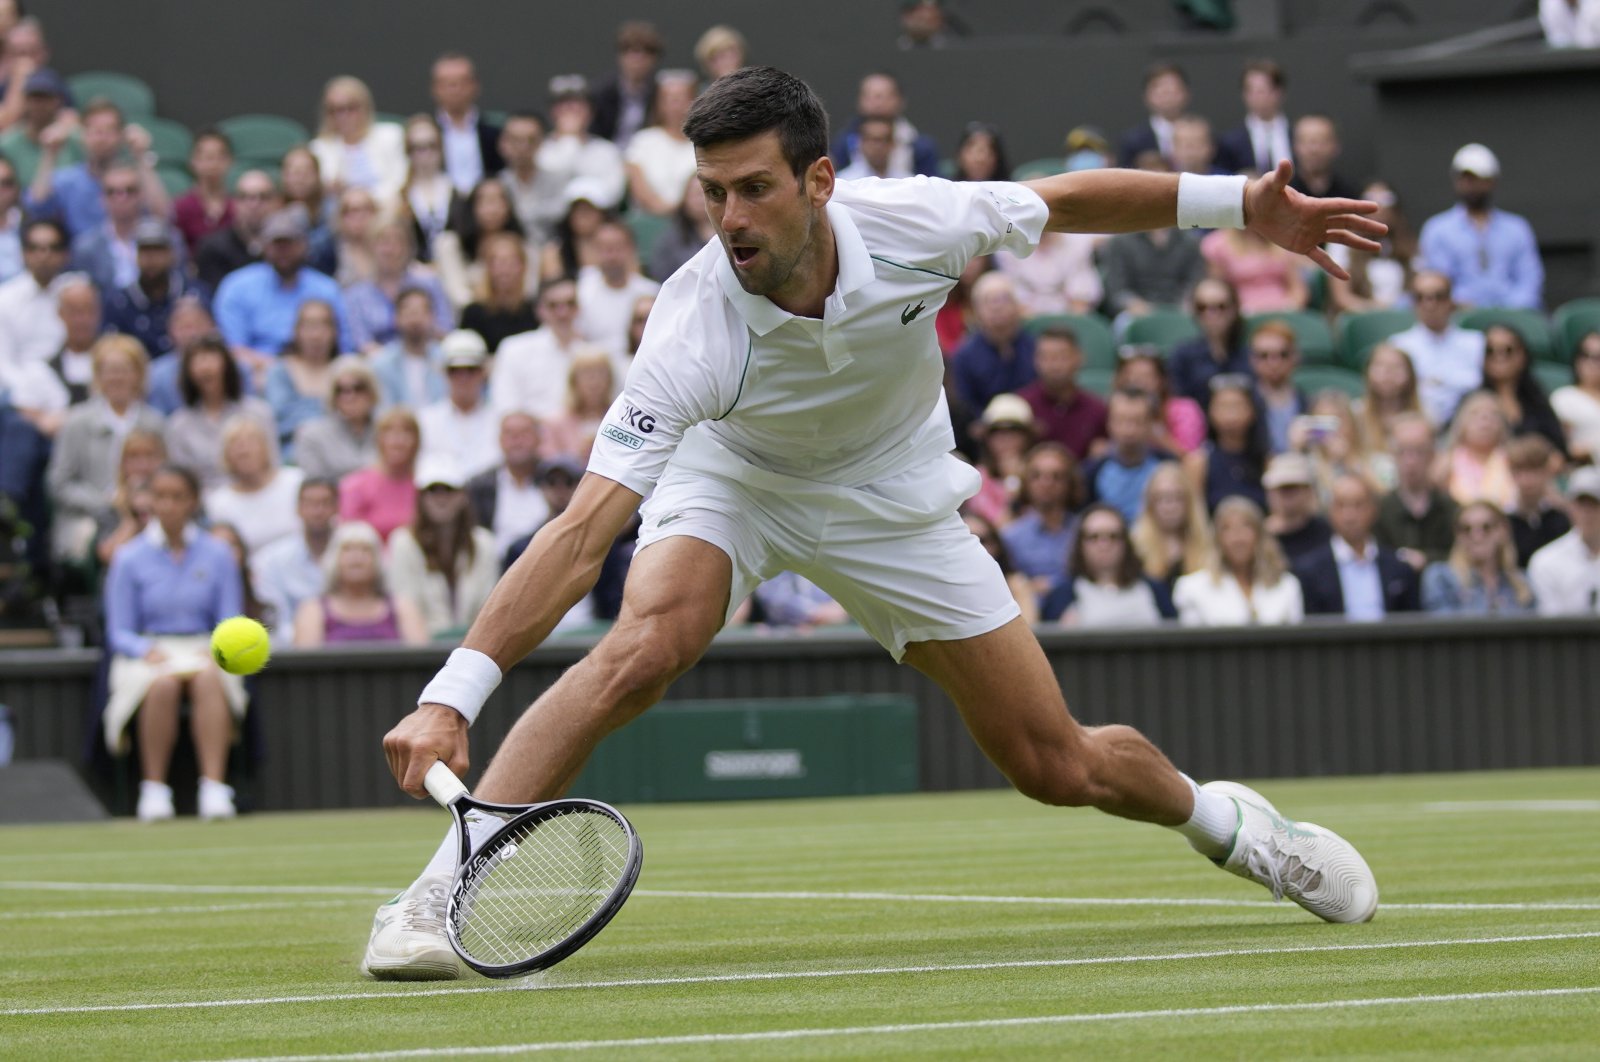 Serbia's Novak Djokovic plays a return to Hungary's Marton Fucsovics during the Wimbledon men's singles quarterfinals match in London, England, July 7, 2021. (AP Photo)